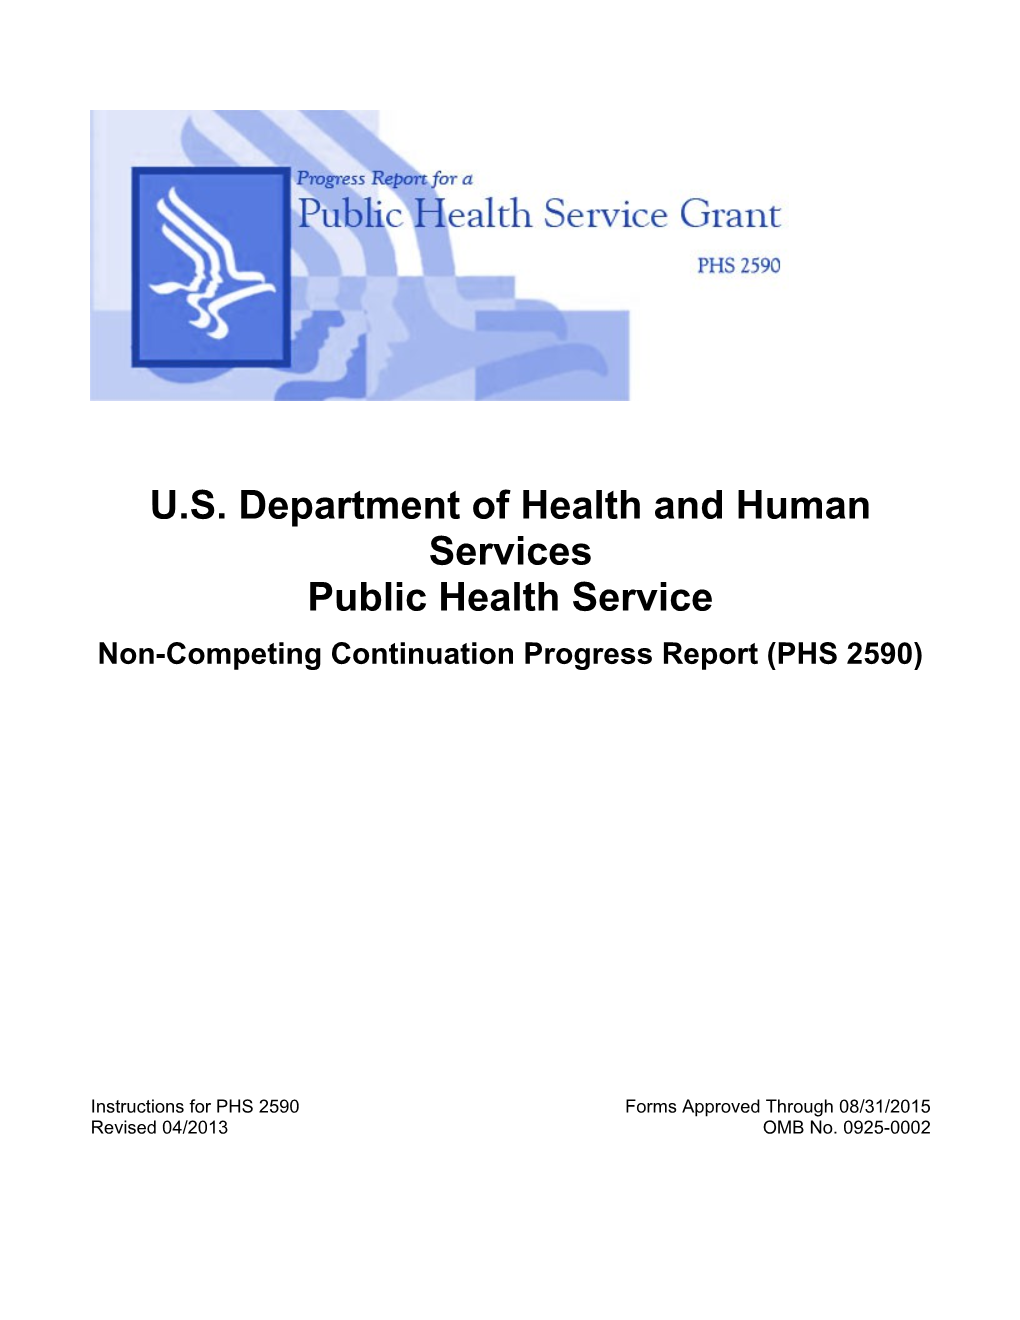 Non-Competing Grant Progress Report (PHS 2590)